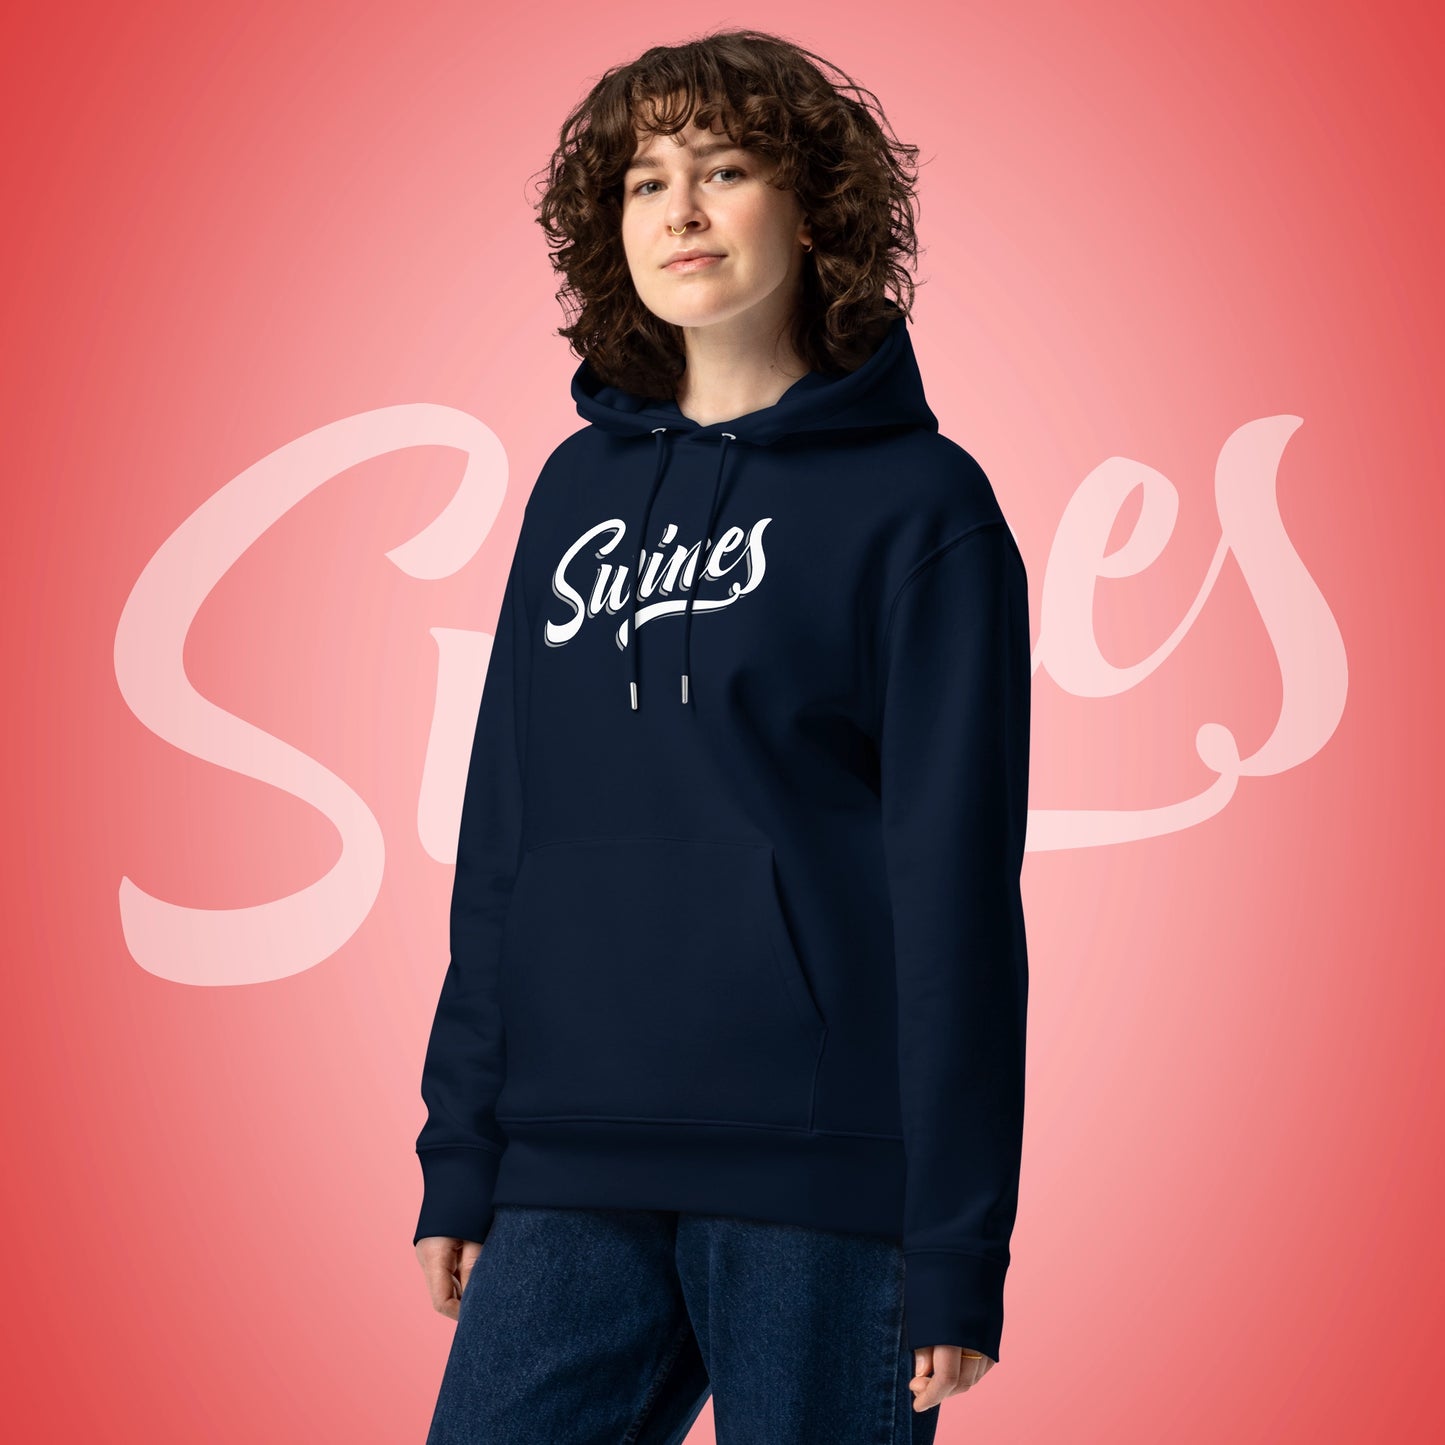 SWINES Live – Logo Hoodie (Adults)